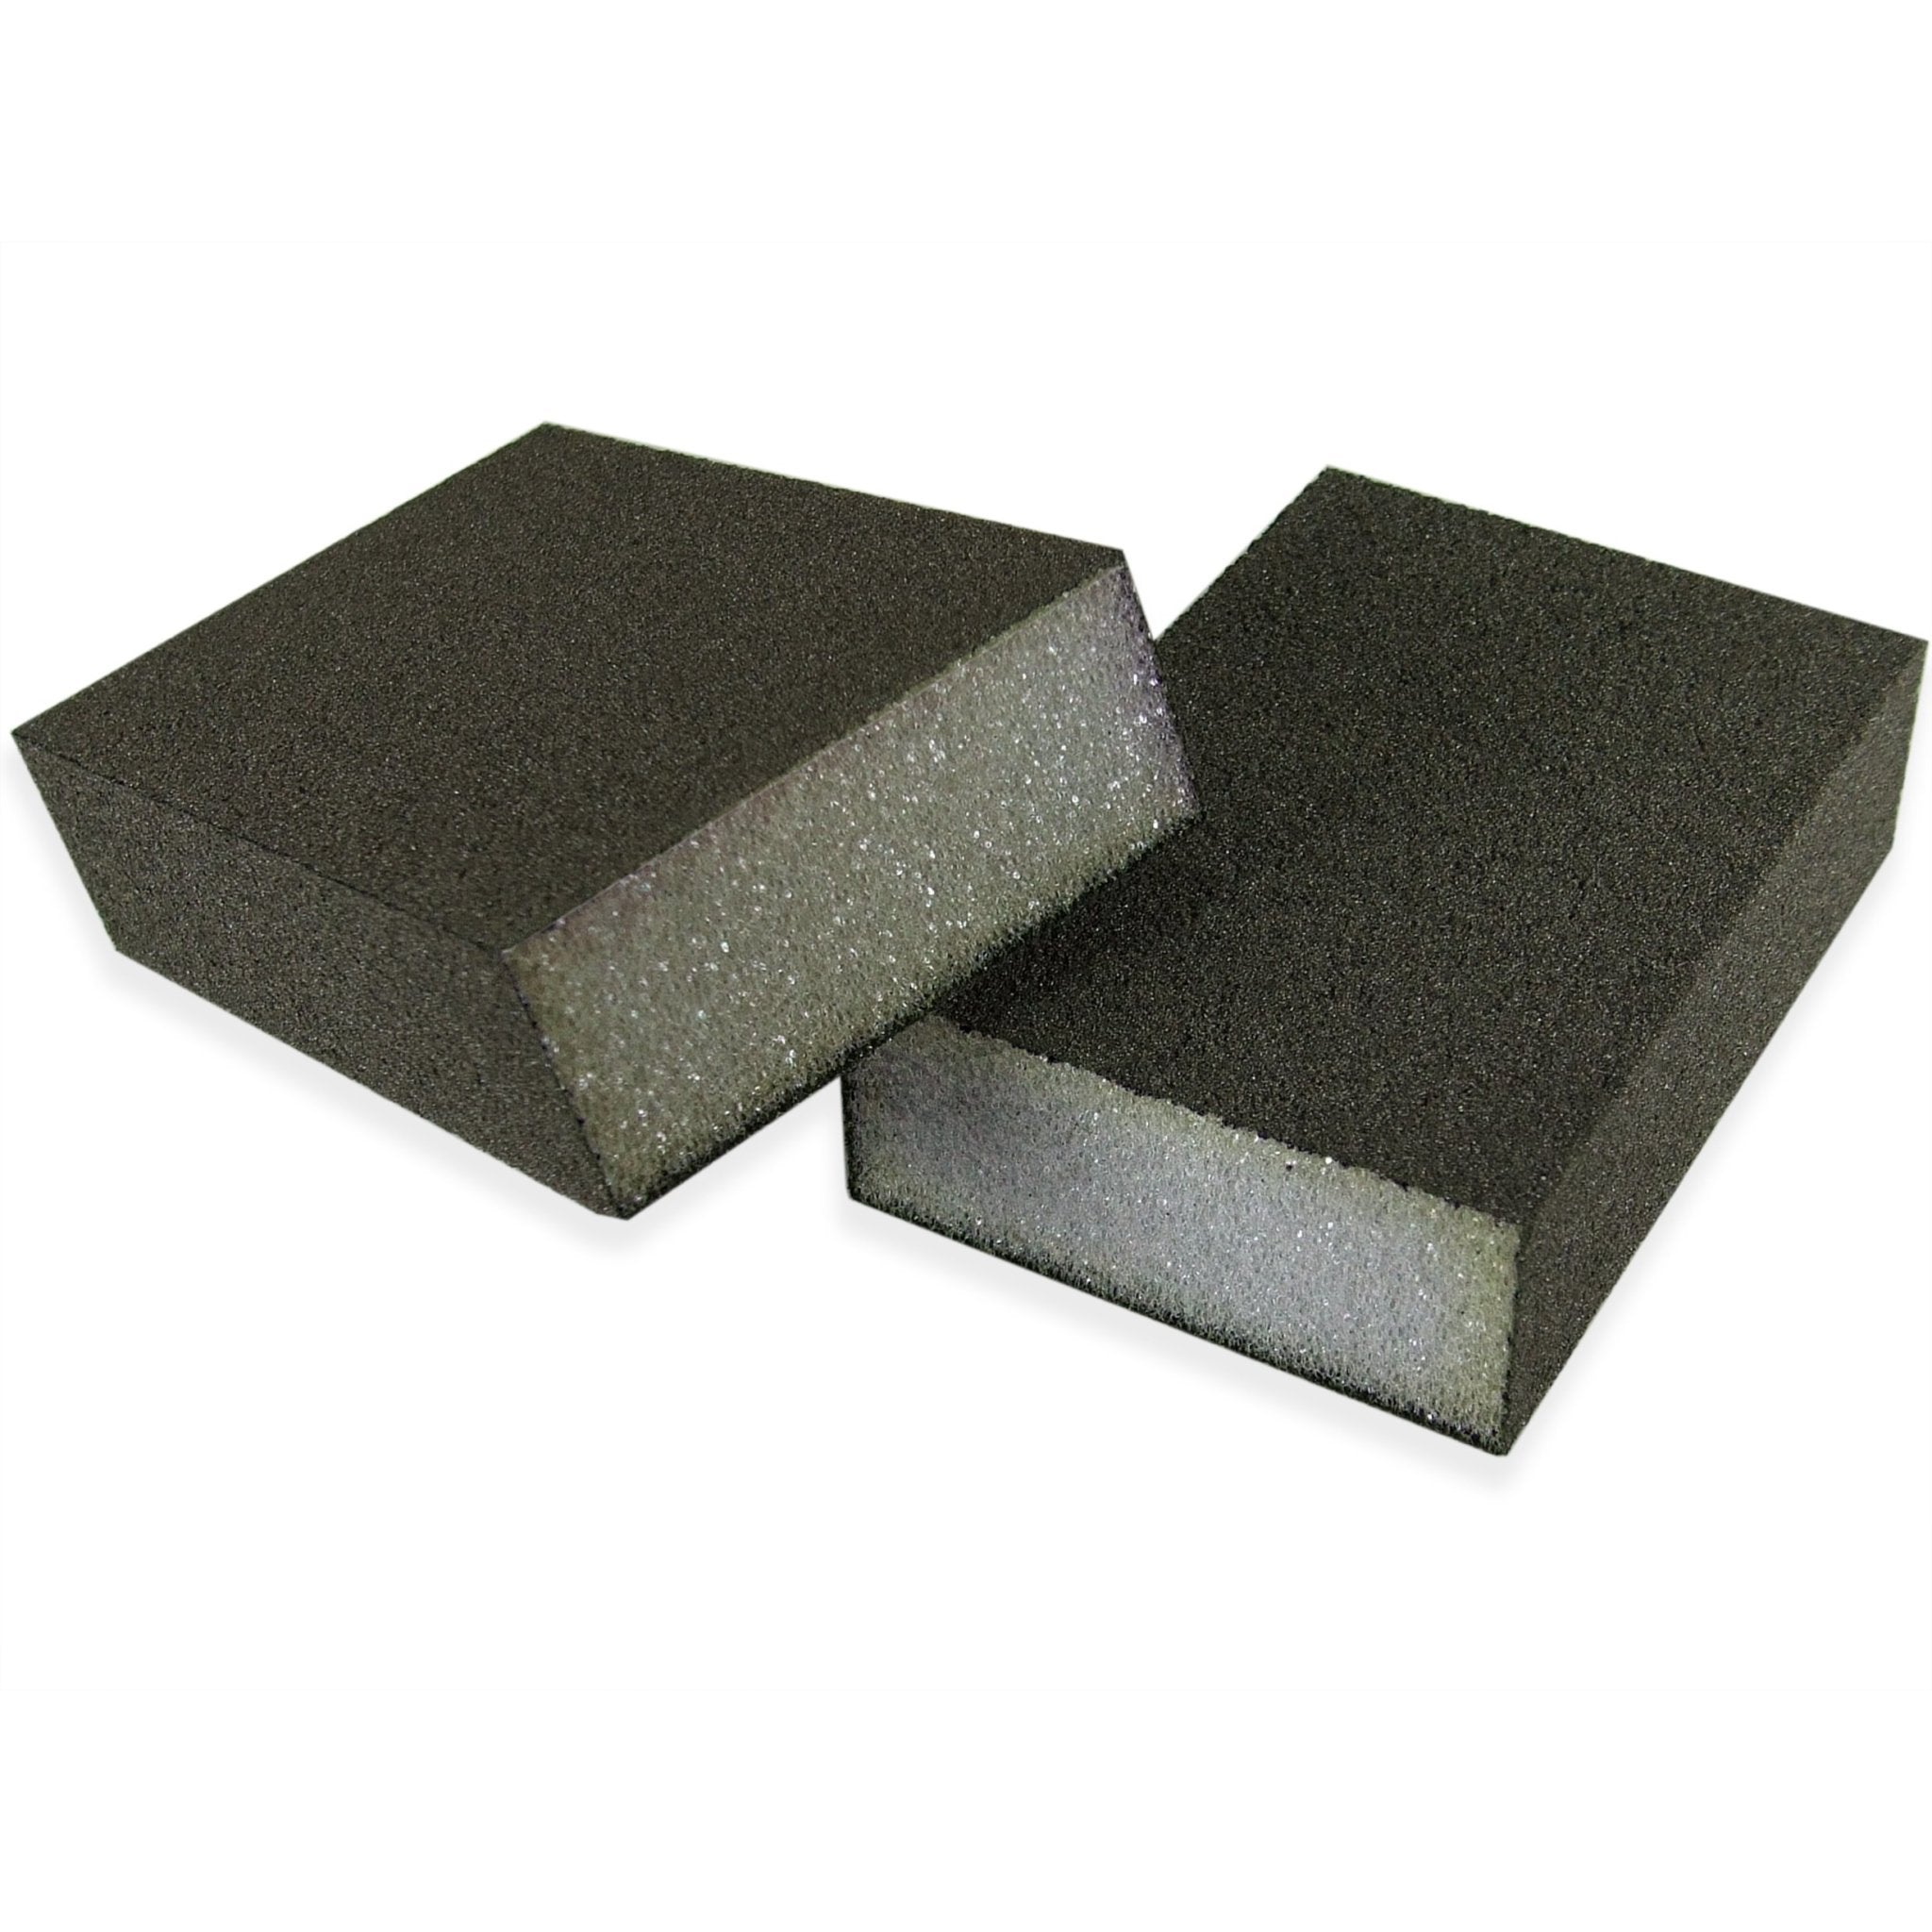 Thick Foam Sponge (7 X 4-1/4 X 2) for tile